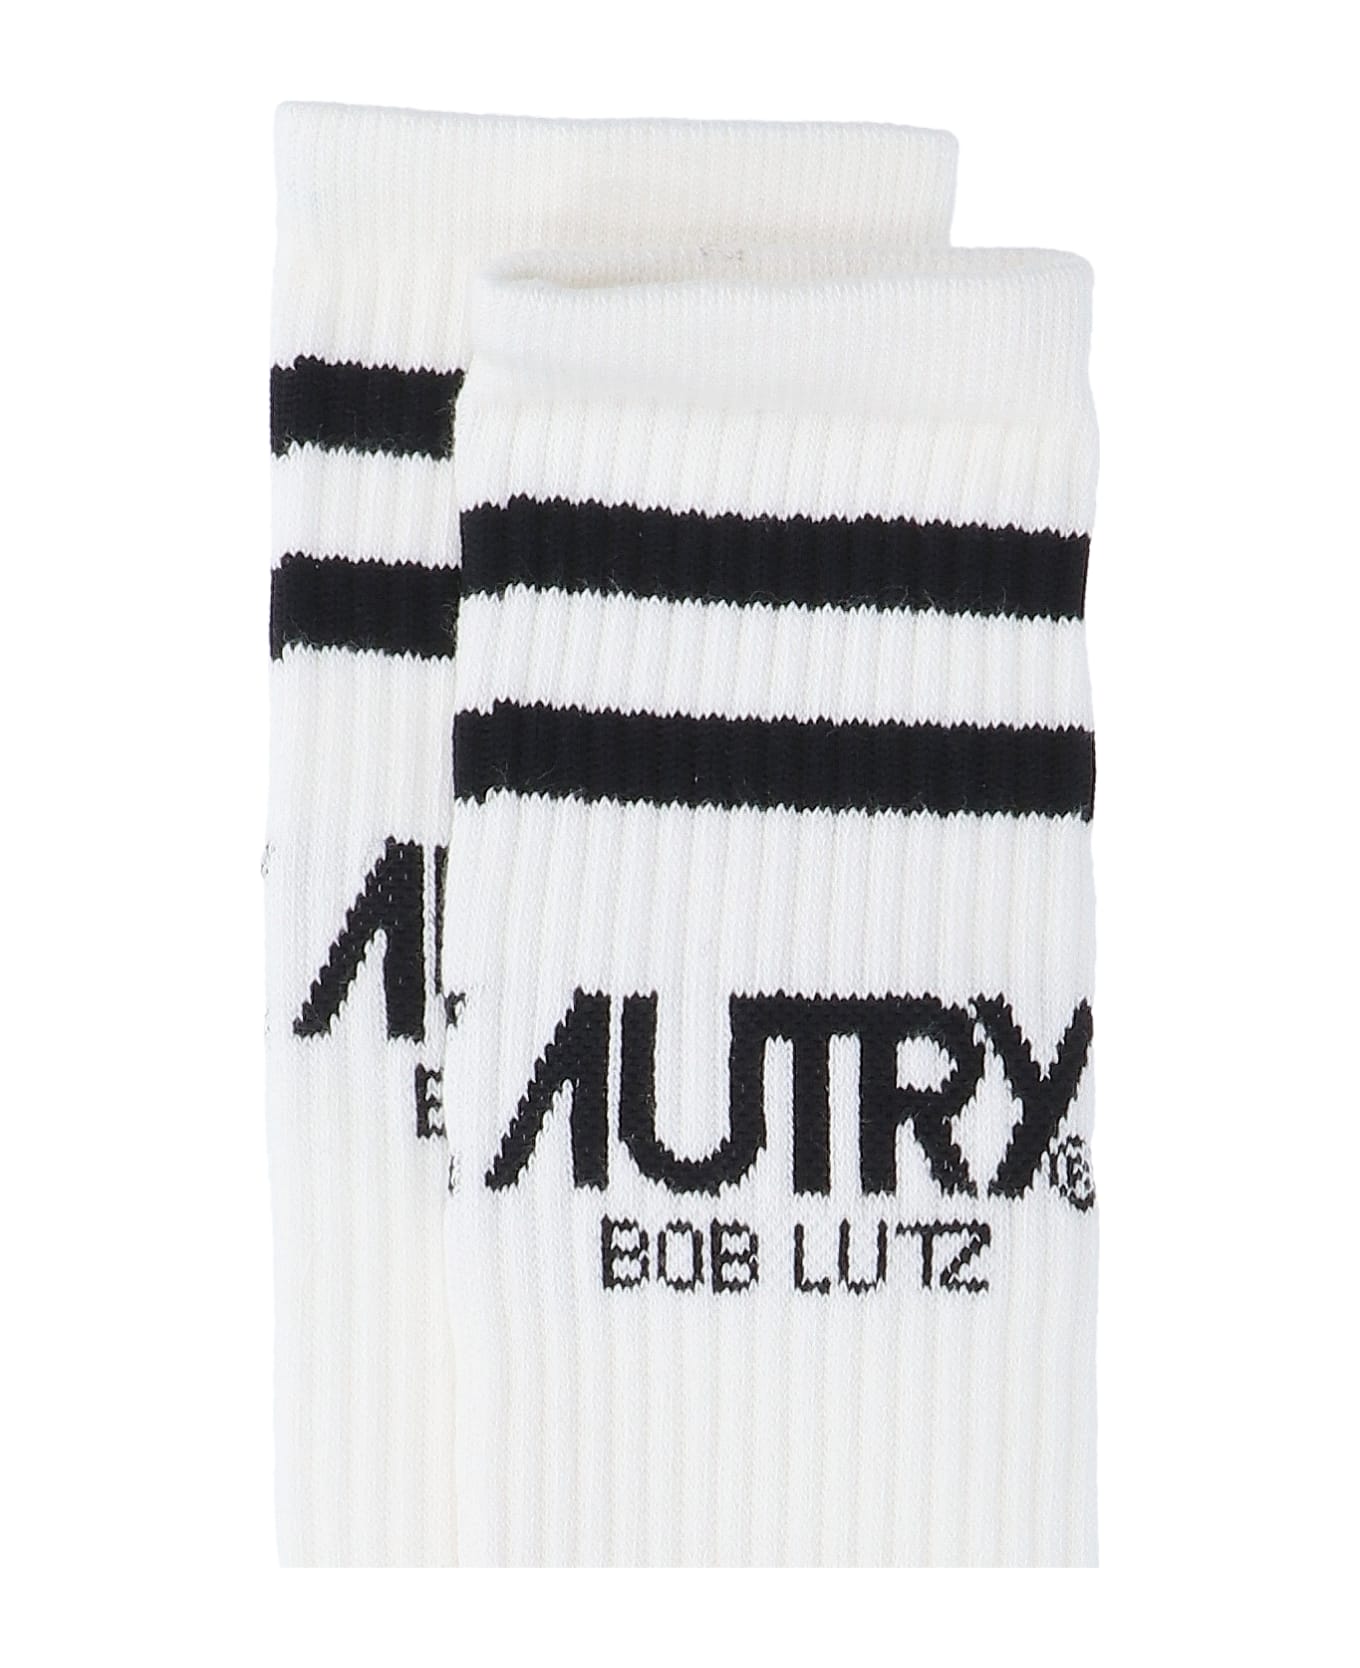 Autry Cotton Socks - White